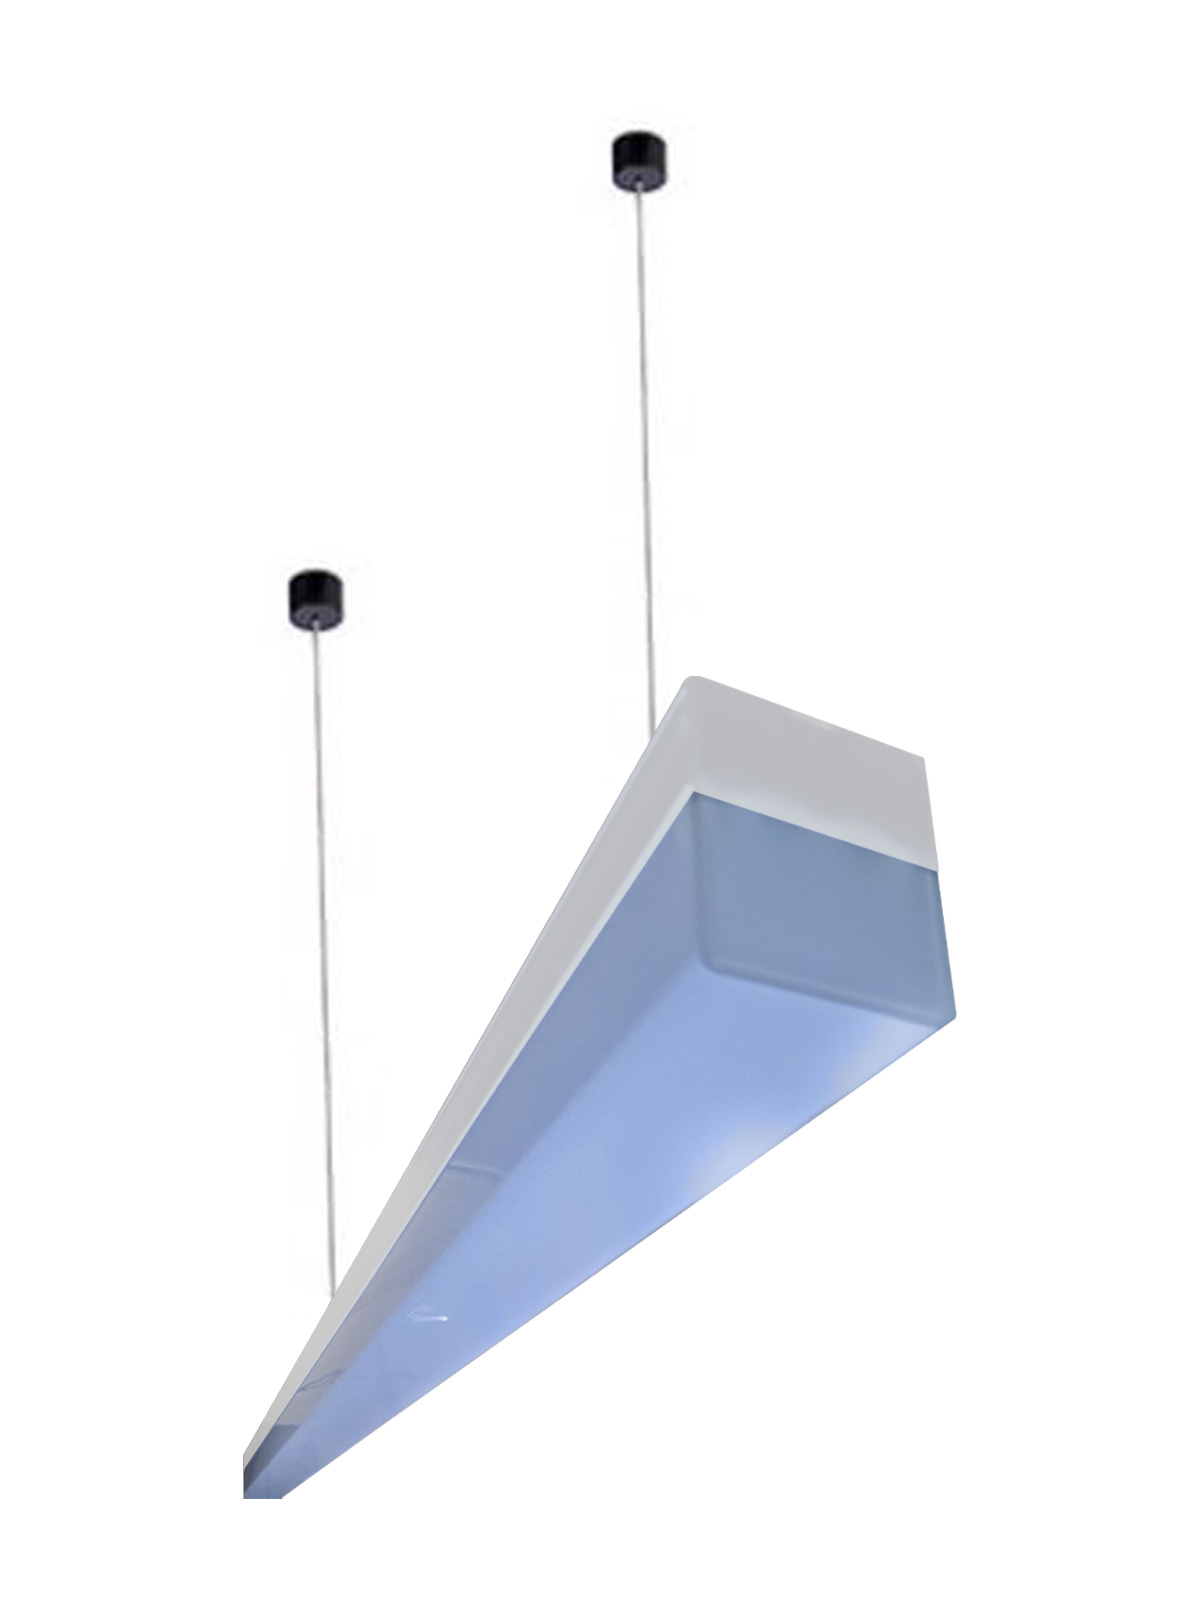 LED Pendant Light (48W, Hanging Linear Light) from Ecoshift